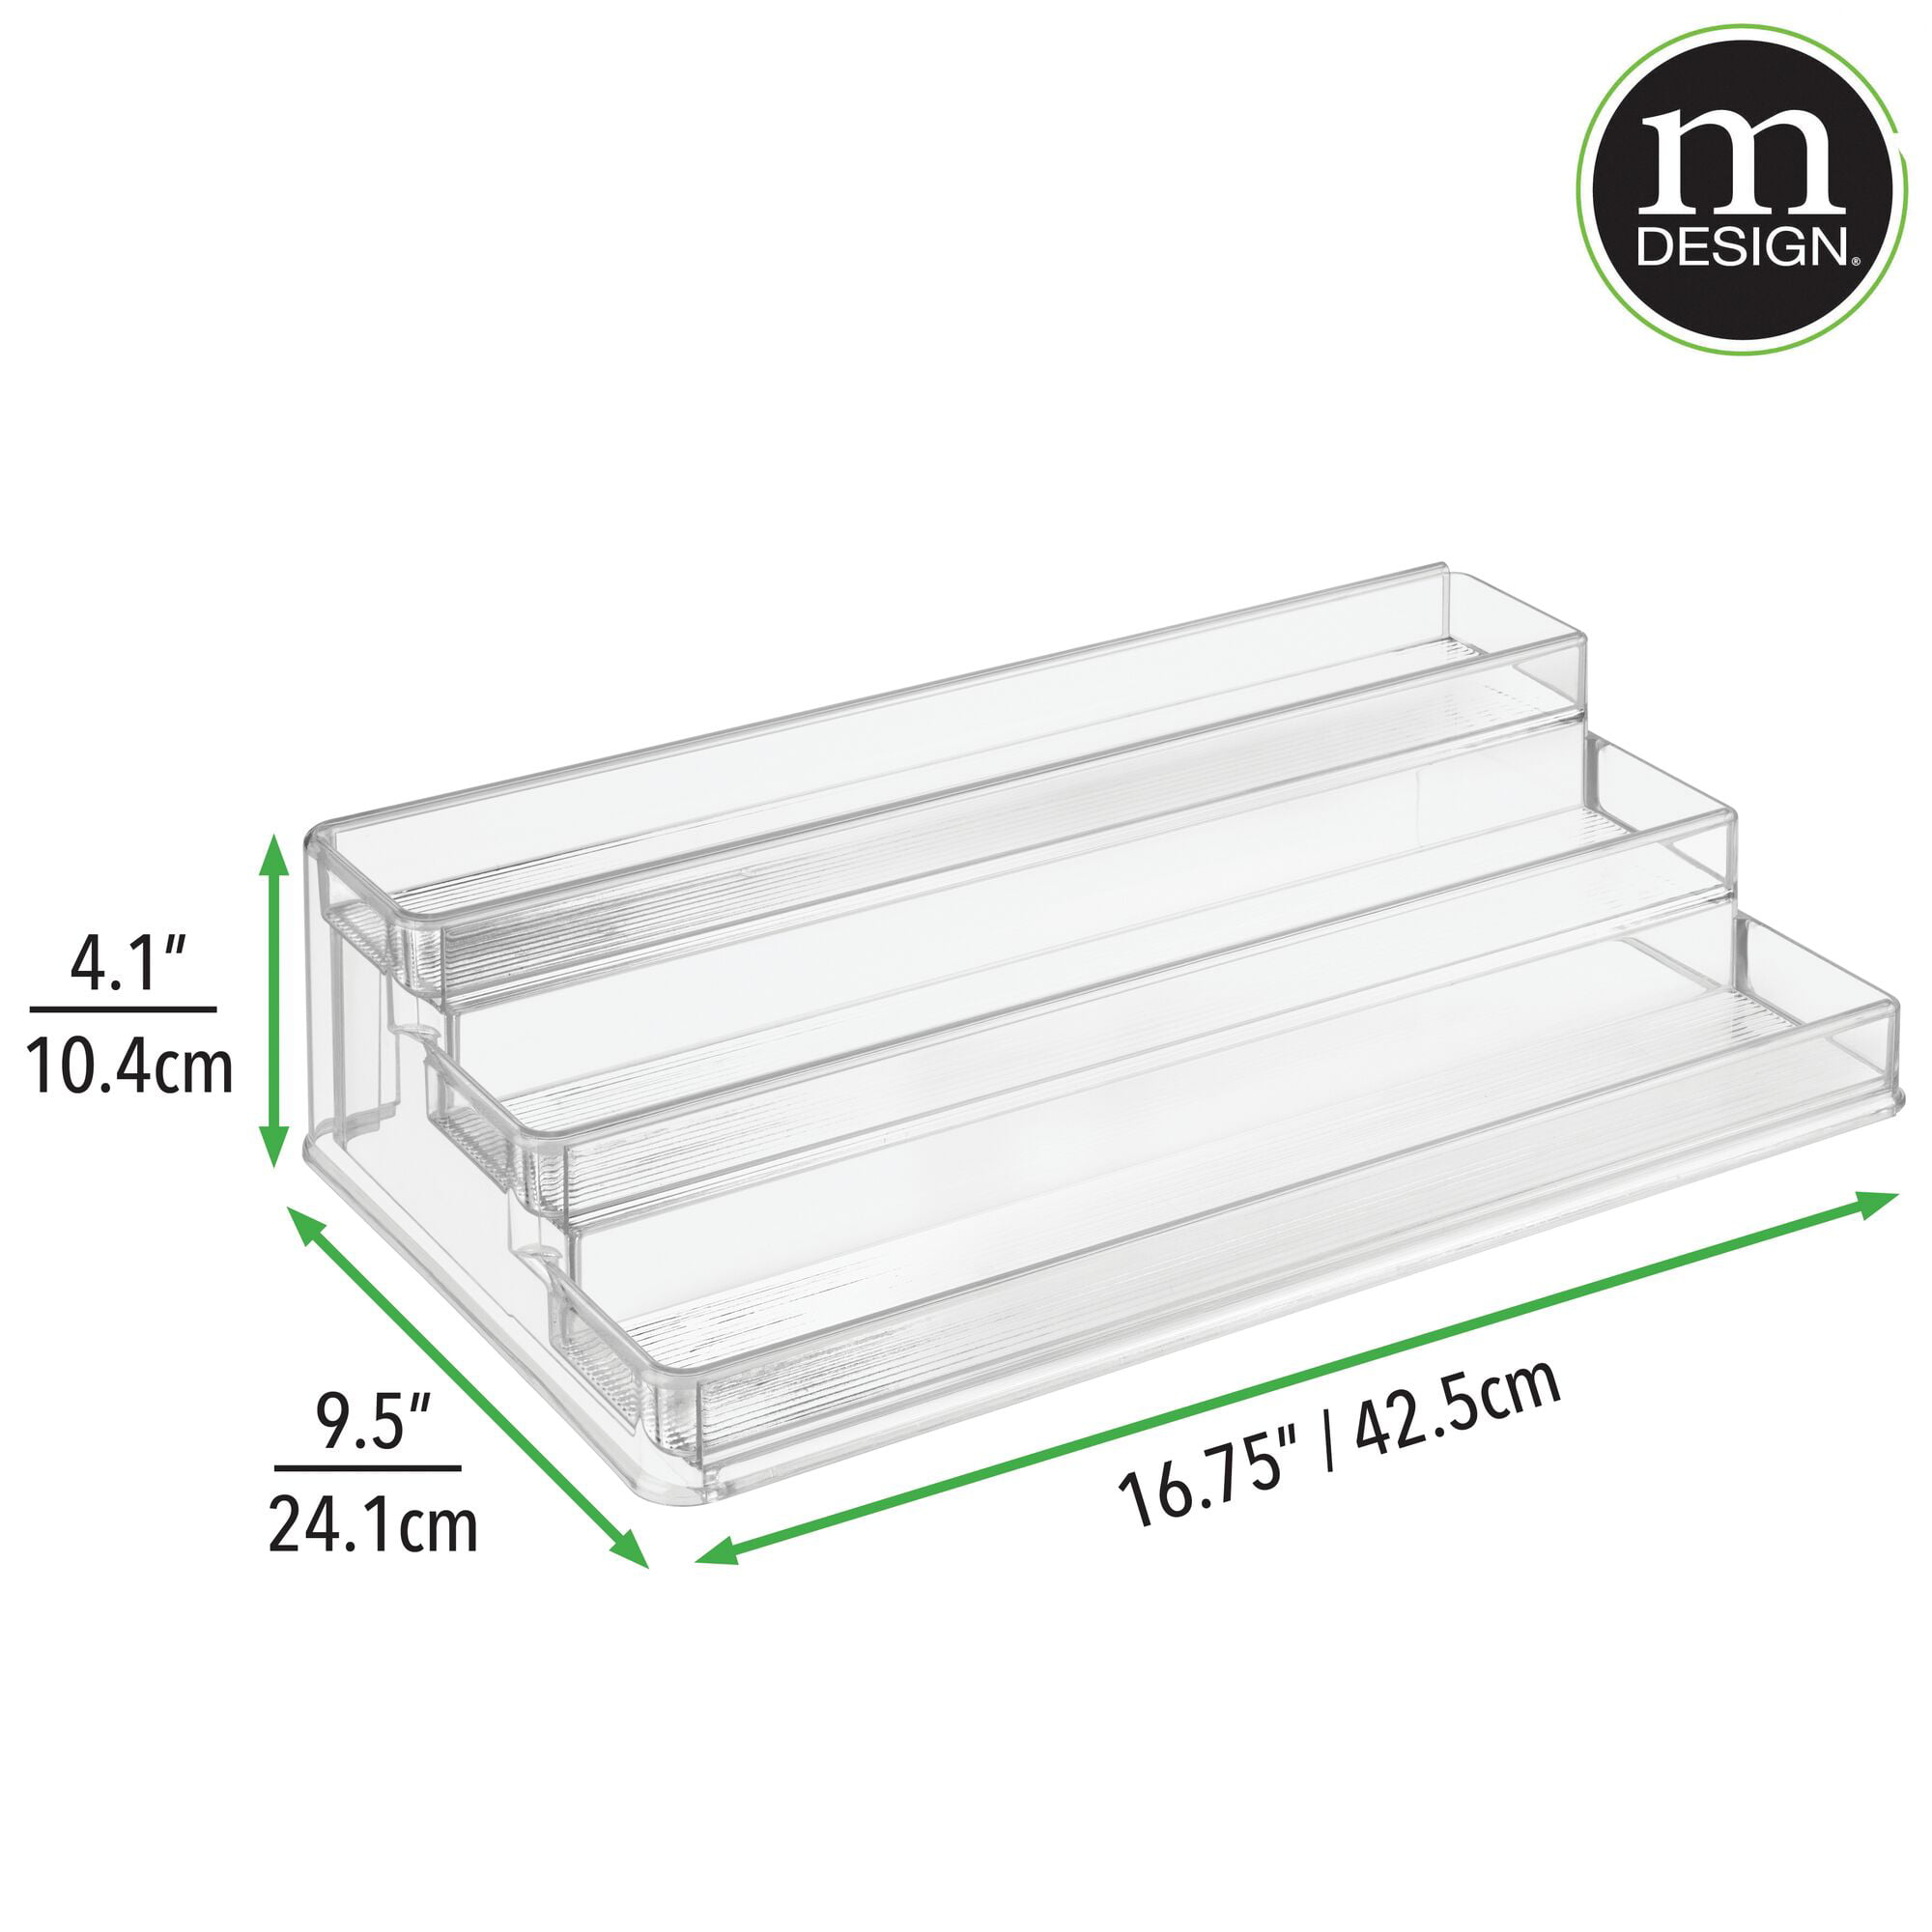 Mdesign Plastic Expandable 3-tier Shelf For Medicine, Vitamins